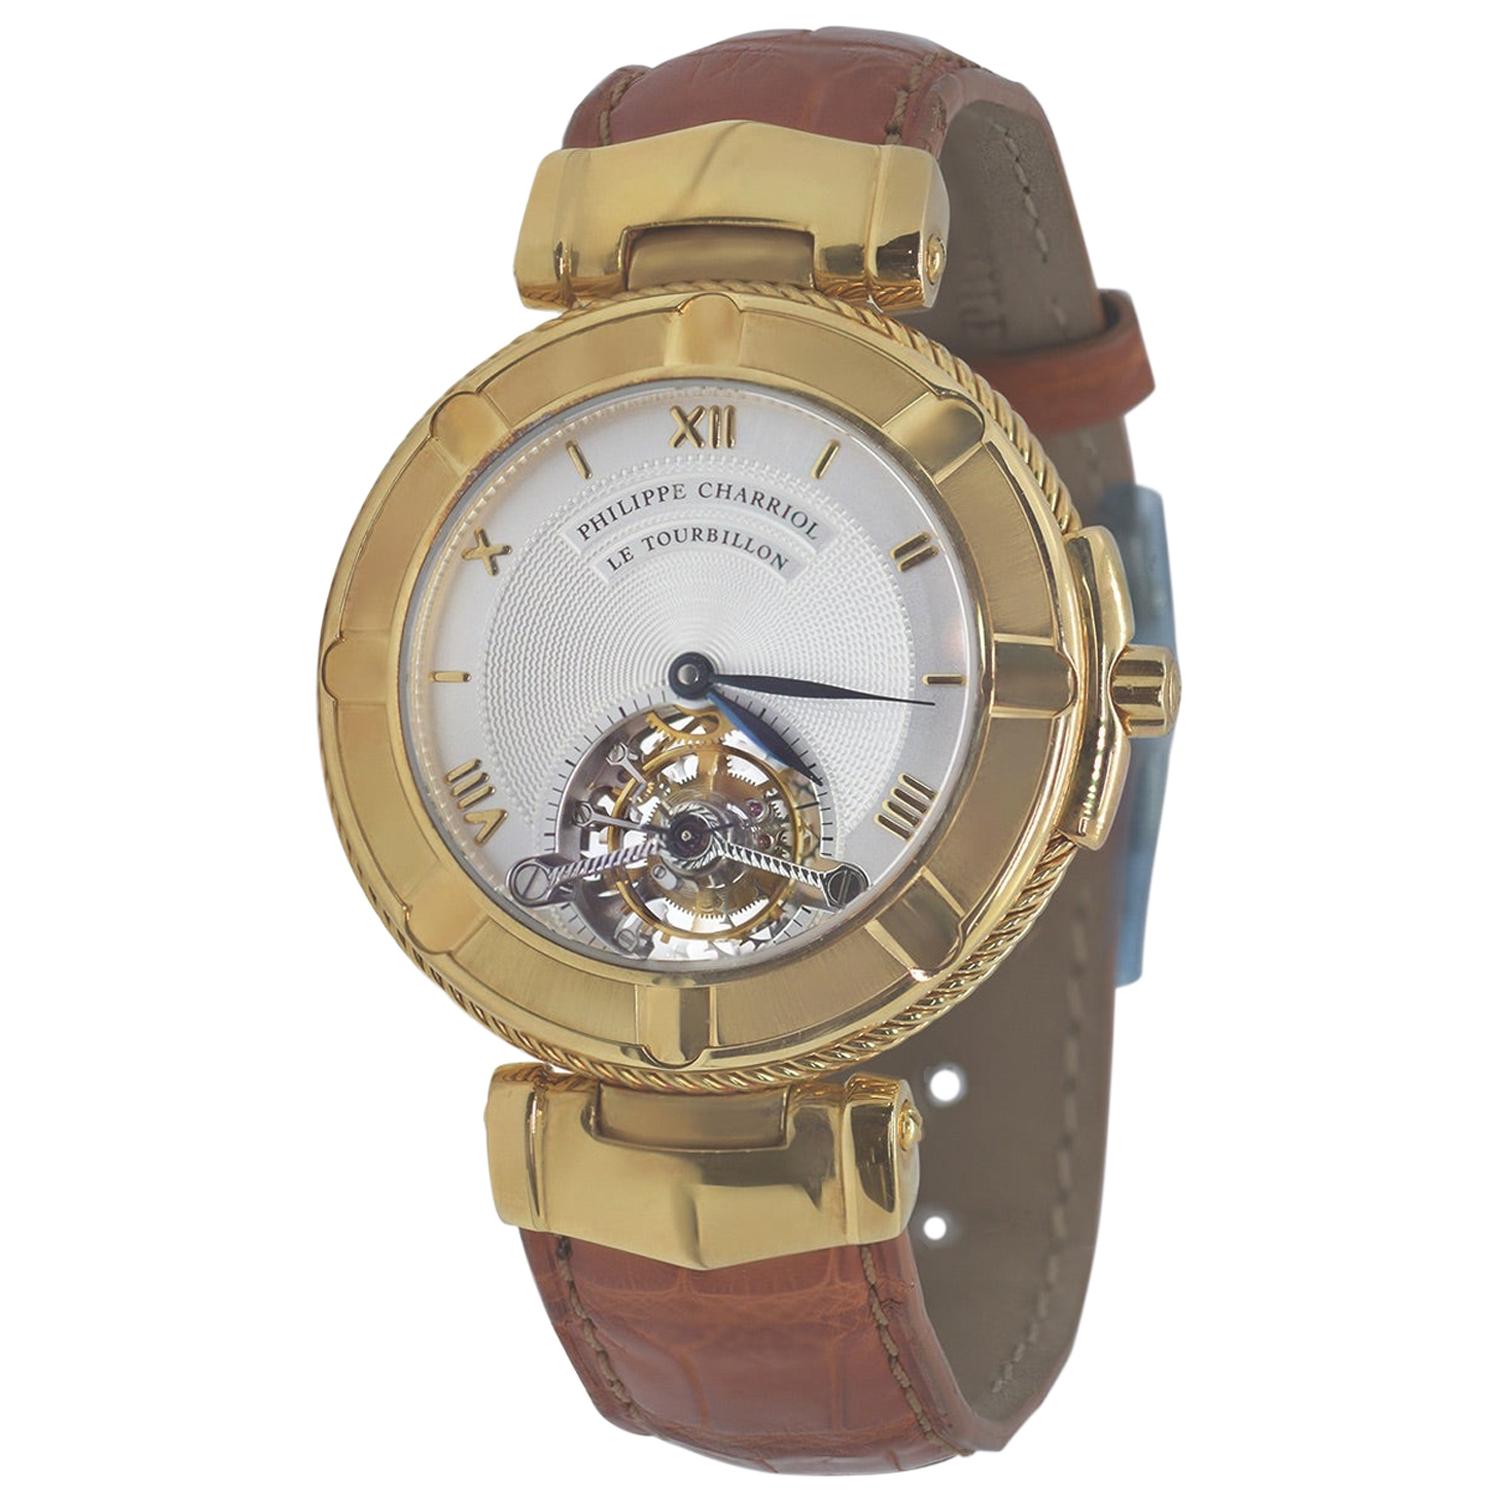 Philippe Charriol Tourbillon 18 Karat Yellow Gold Bezel Watch Limited Edition #4 For Sale